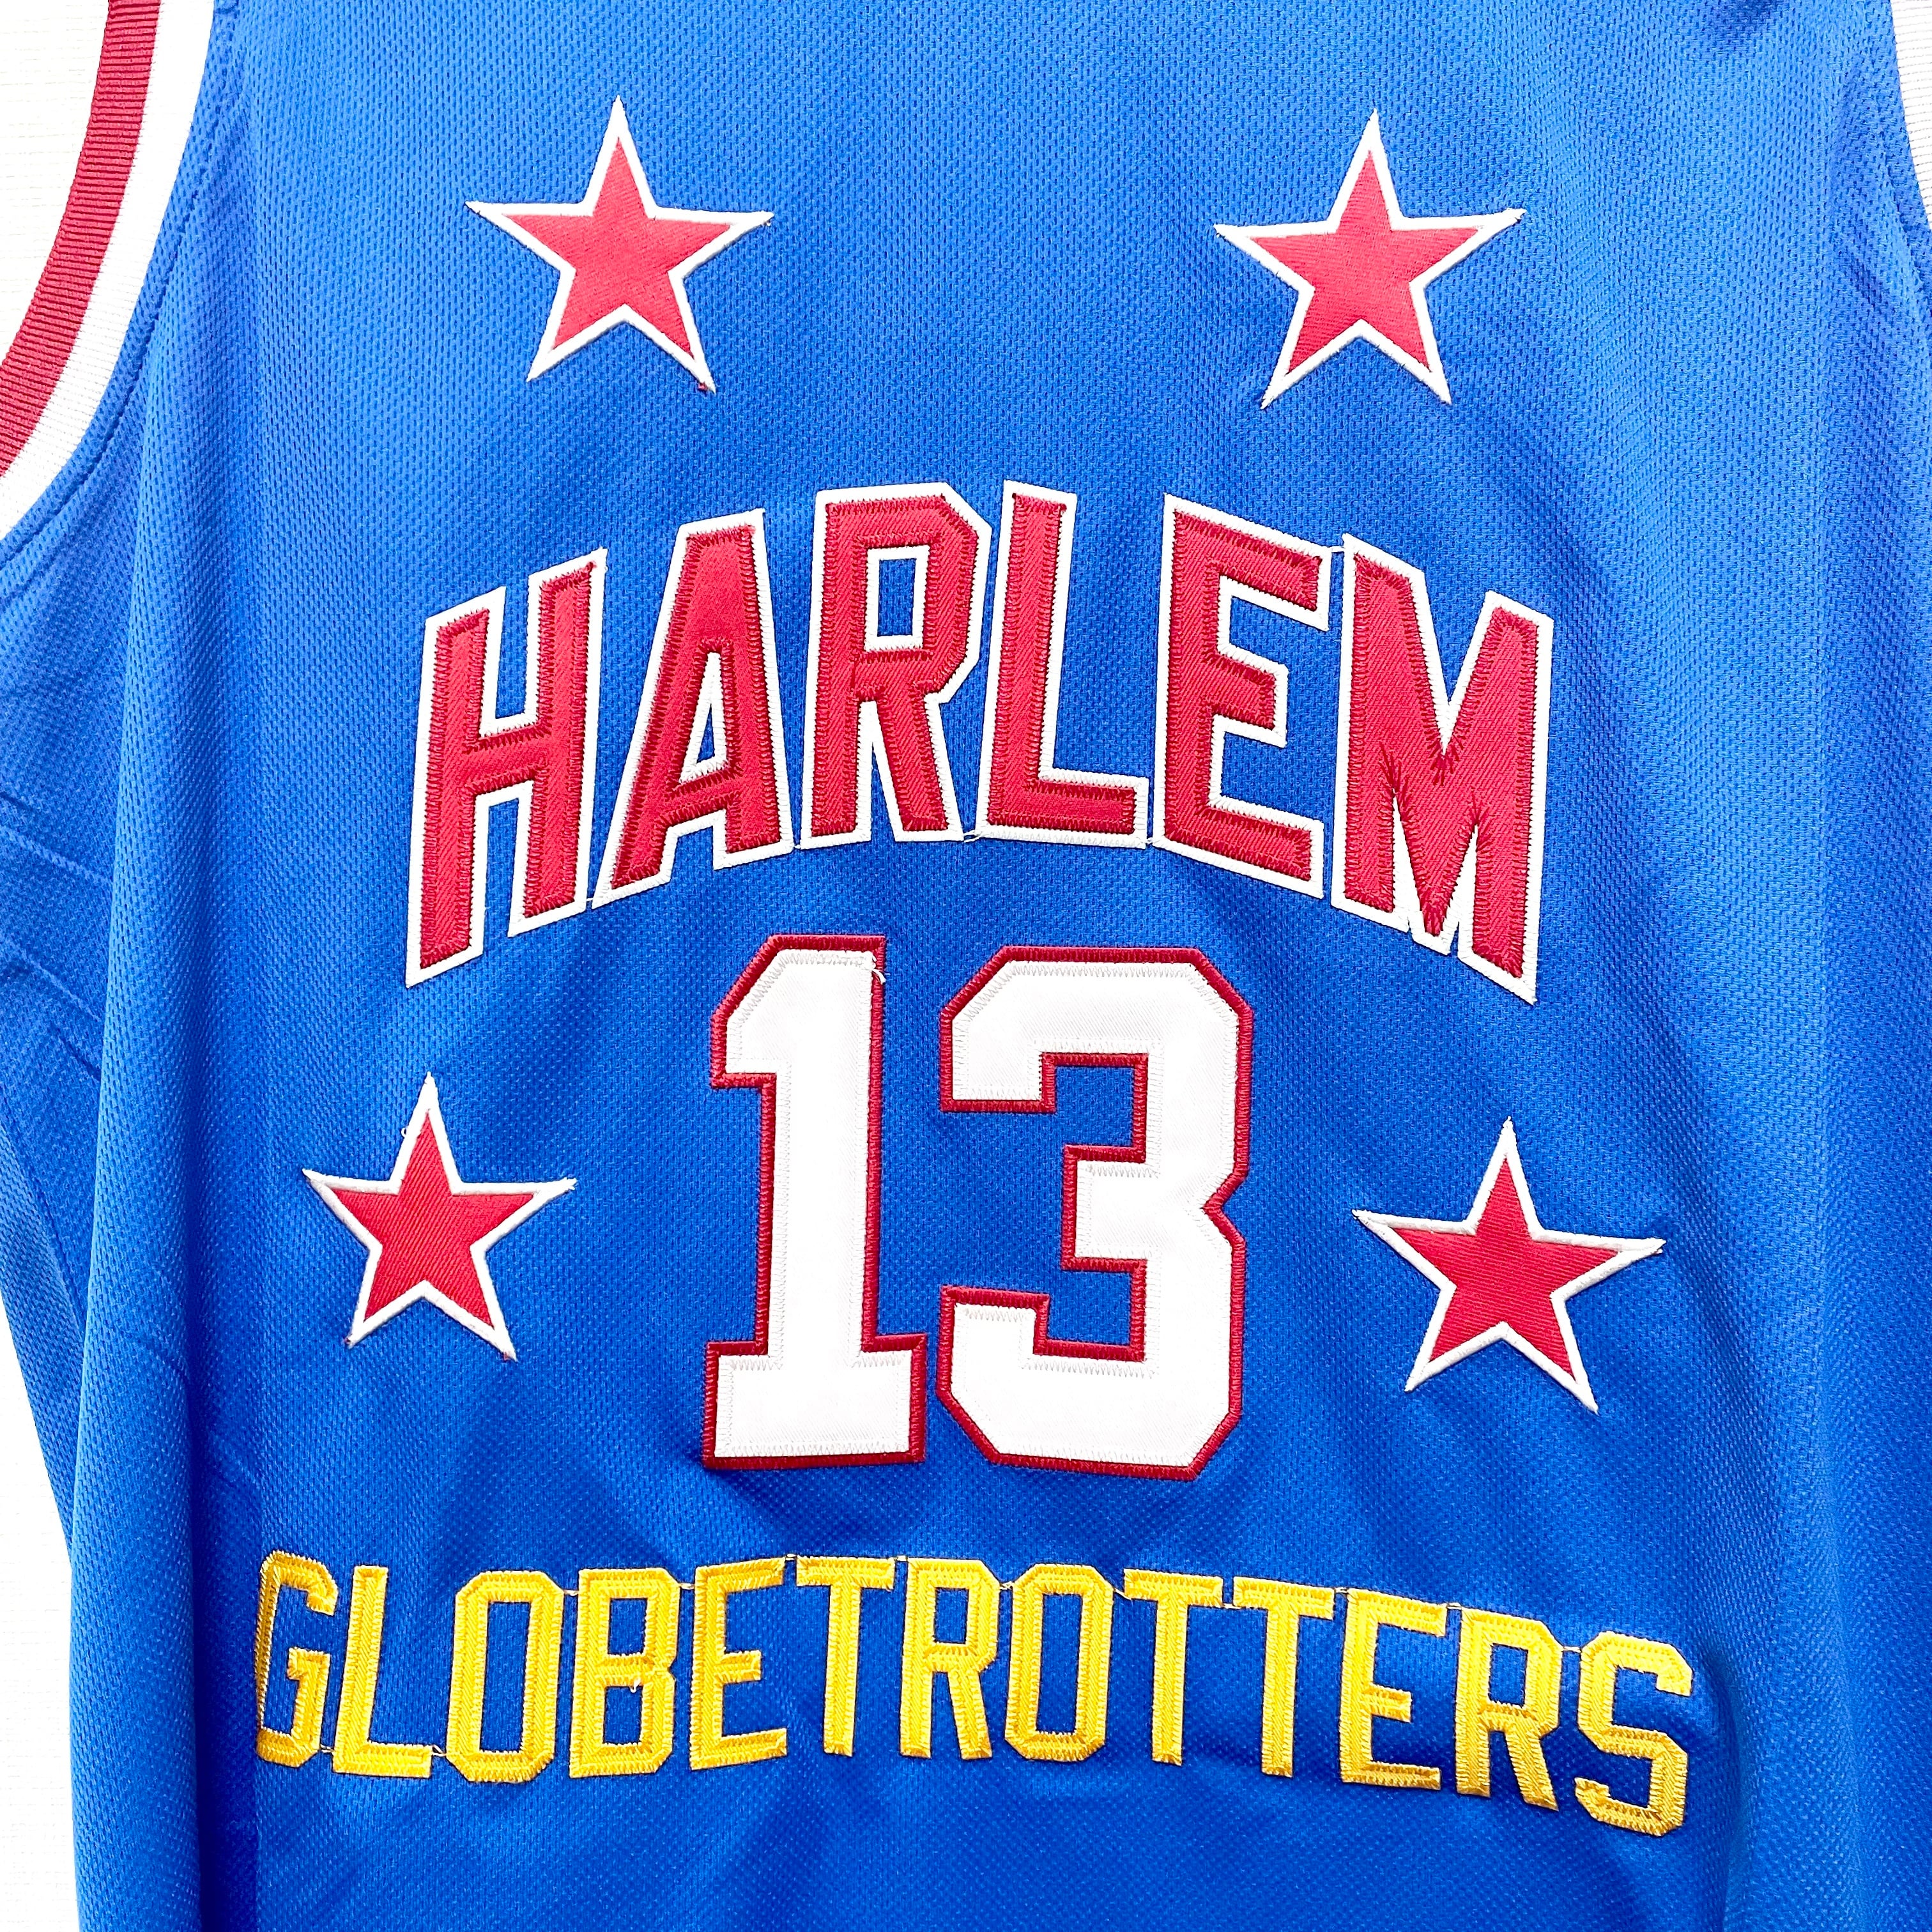 Harlem Globetrotters ウィルトチェンバレン ユニフォーム ハーレムグローブトロッターズ Wilt Chamberlain